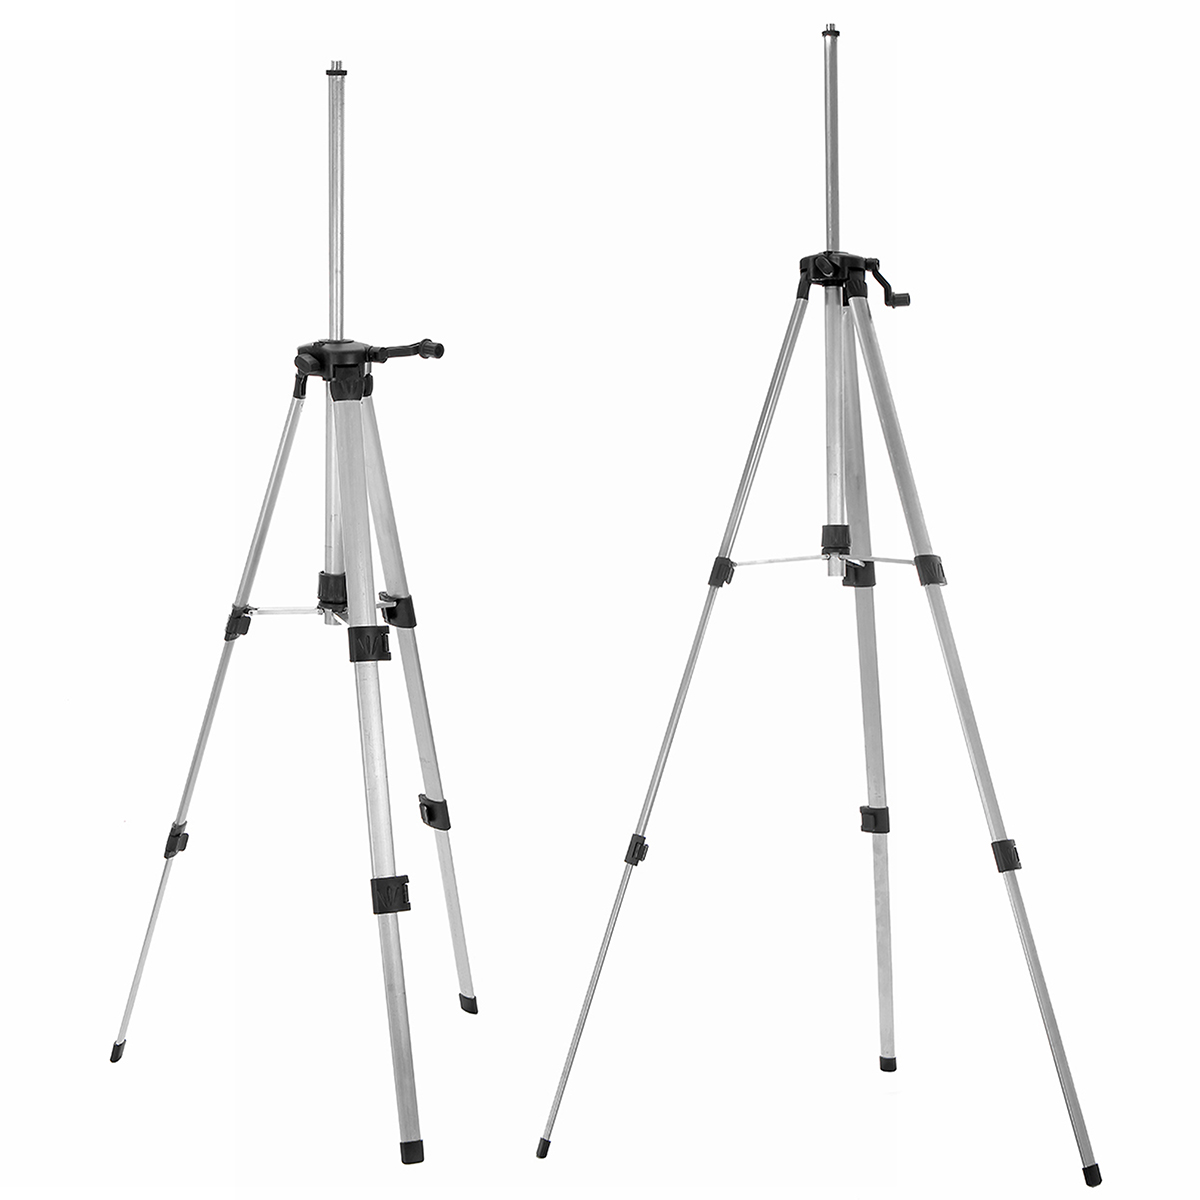 Bakeey 120cm/150cm Universal Aluminum Alloy Telescopic Tripod Adjustable Stand